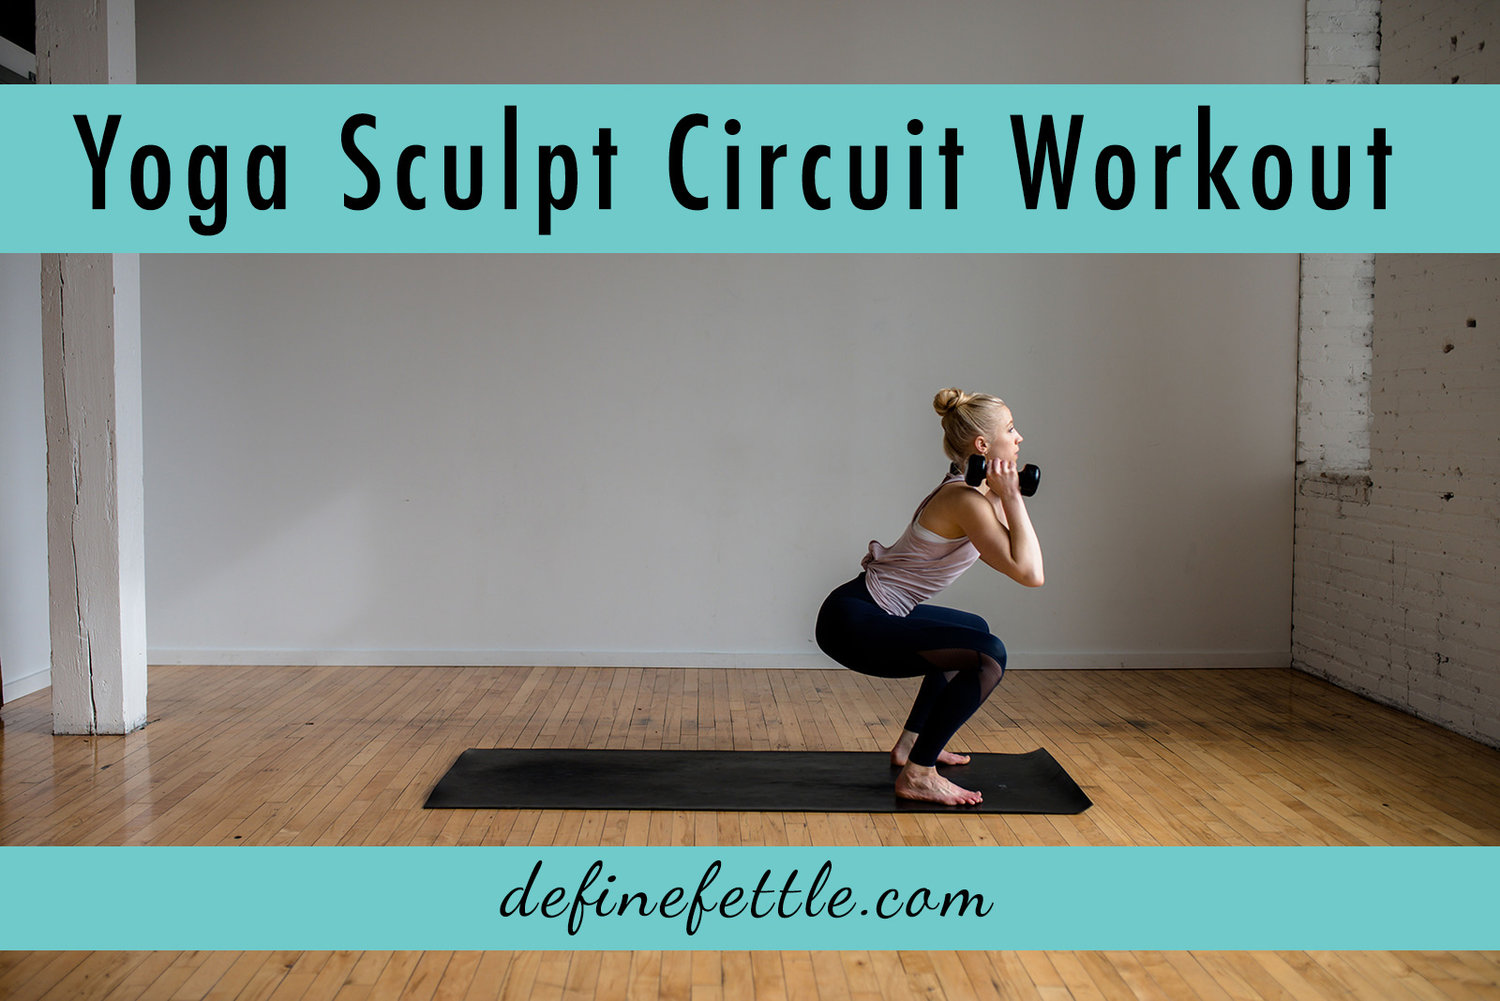 45 Minute Yoga Sculpt  Full body workout 